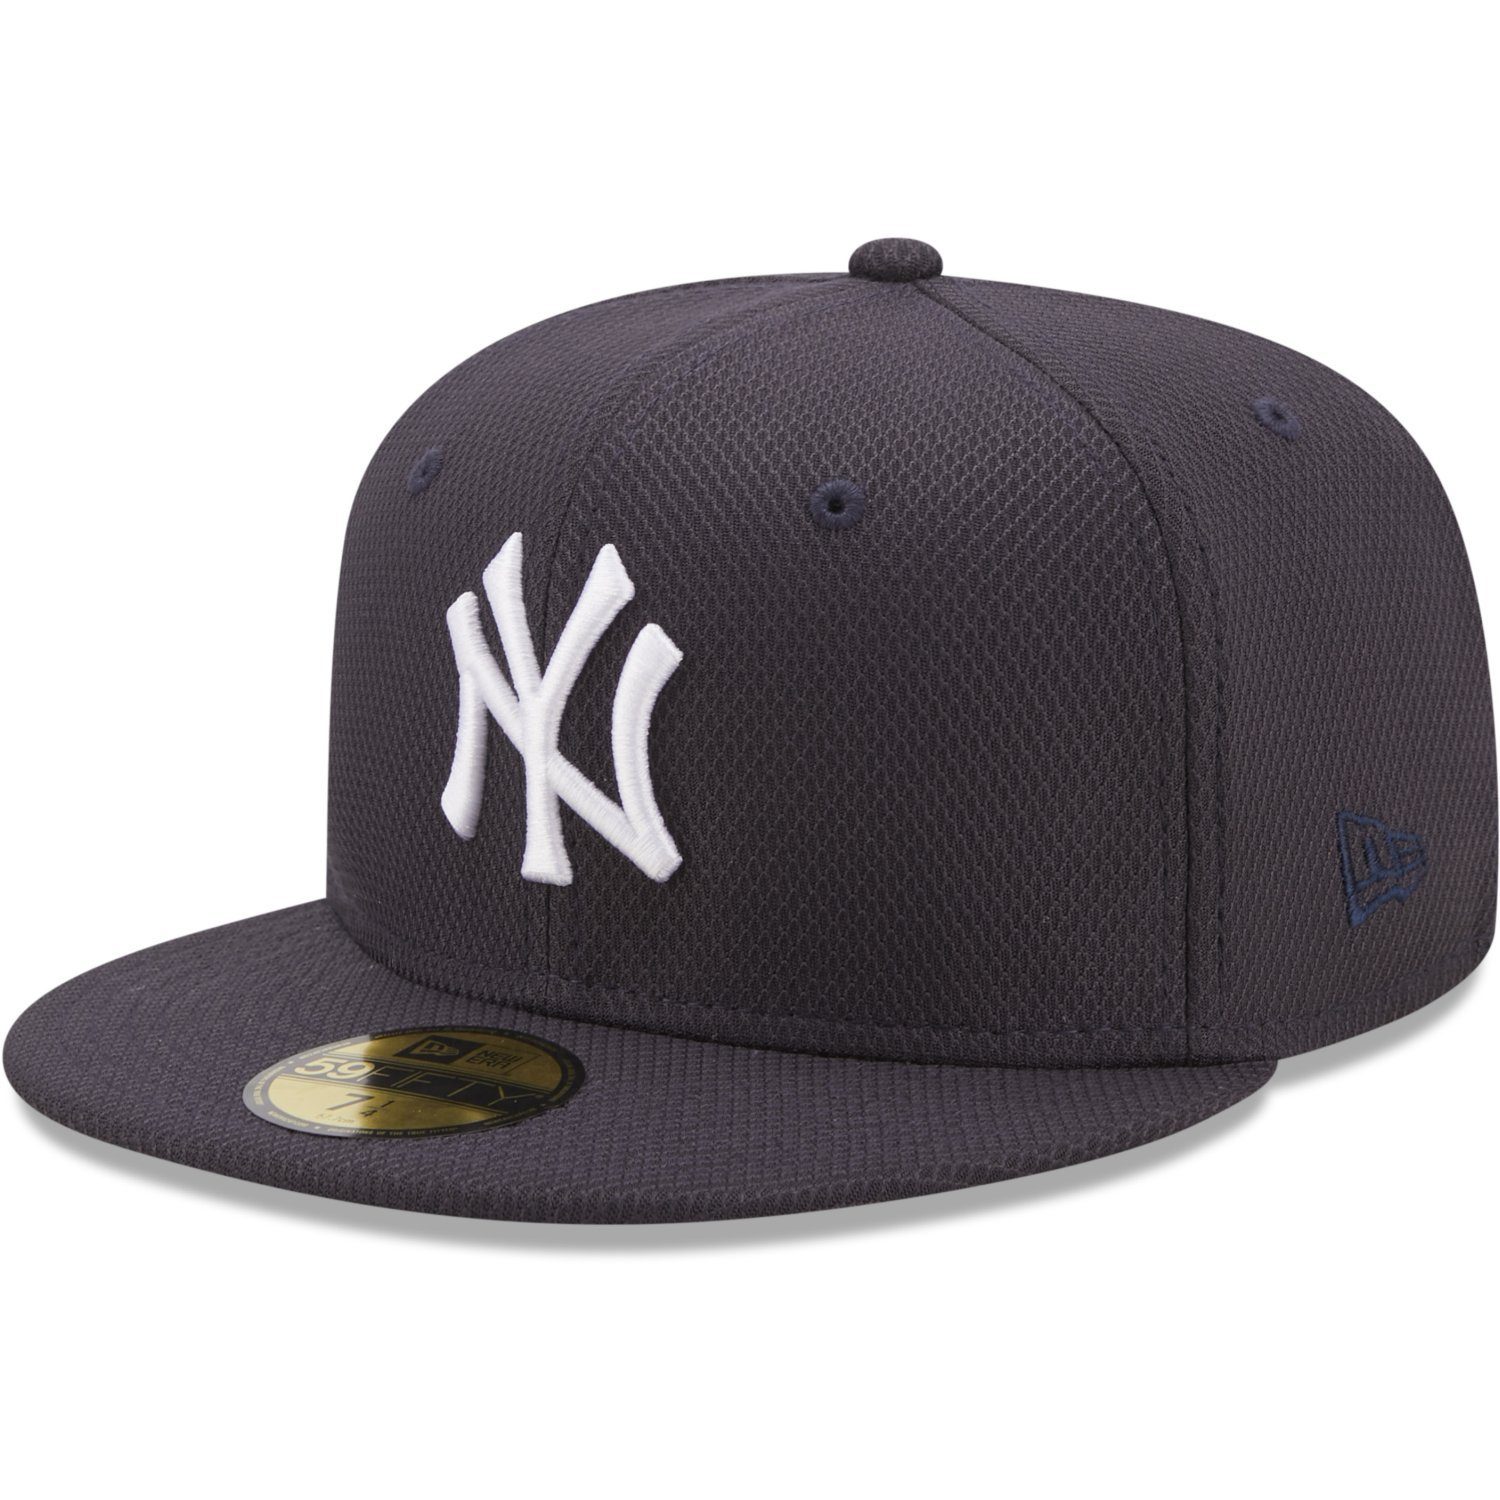 New Era Fitted Cap York 59Fifty dunkelblau DIAMOND Yankees New